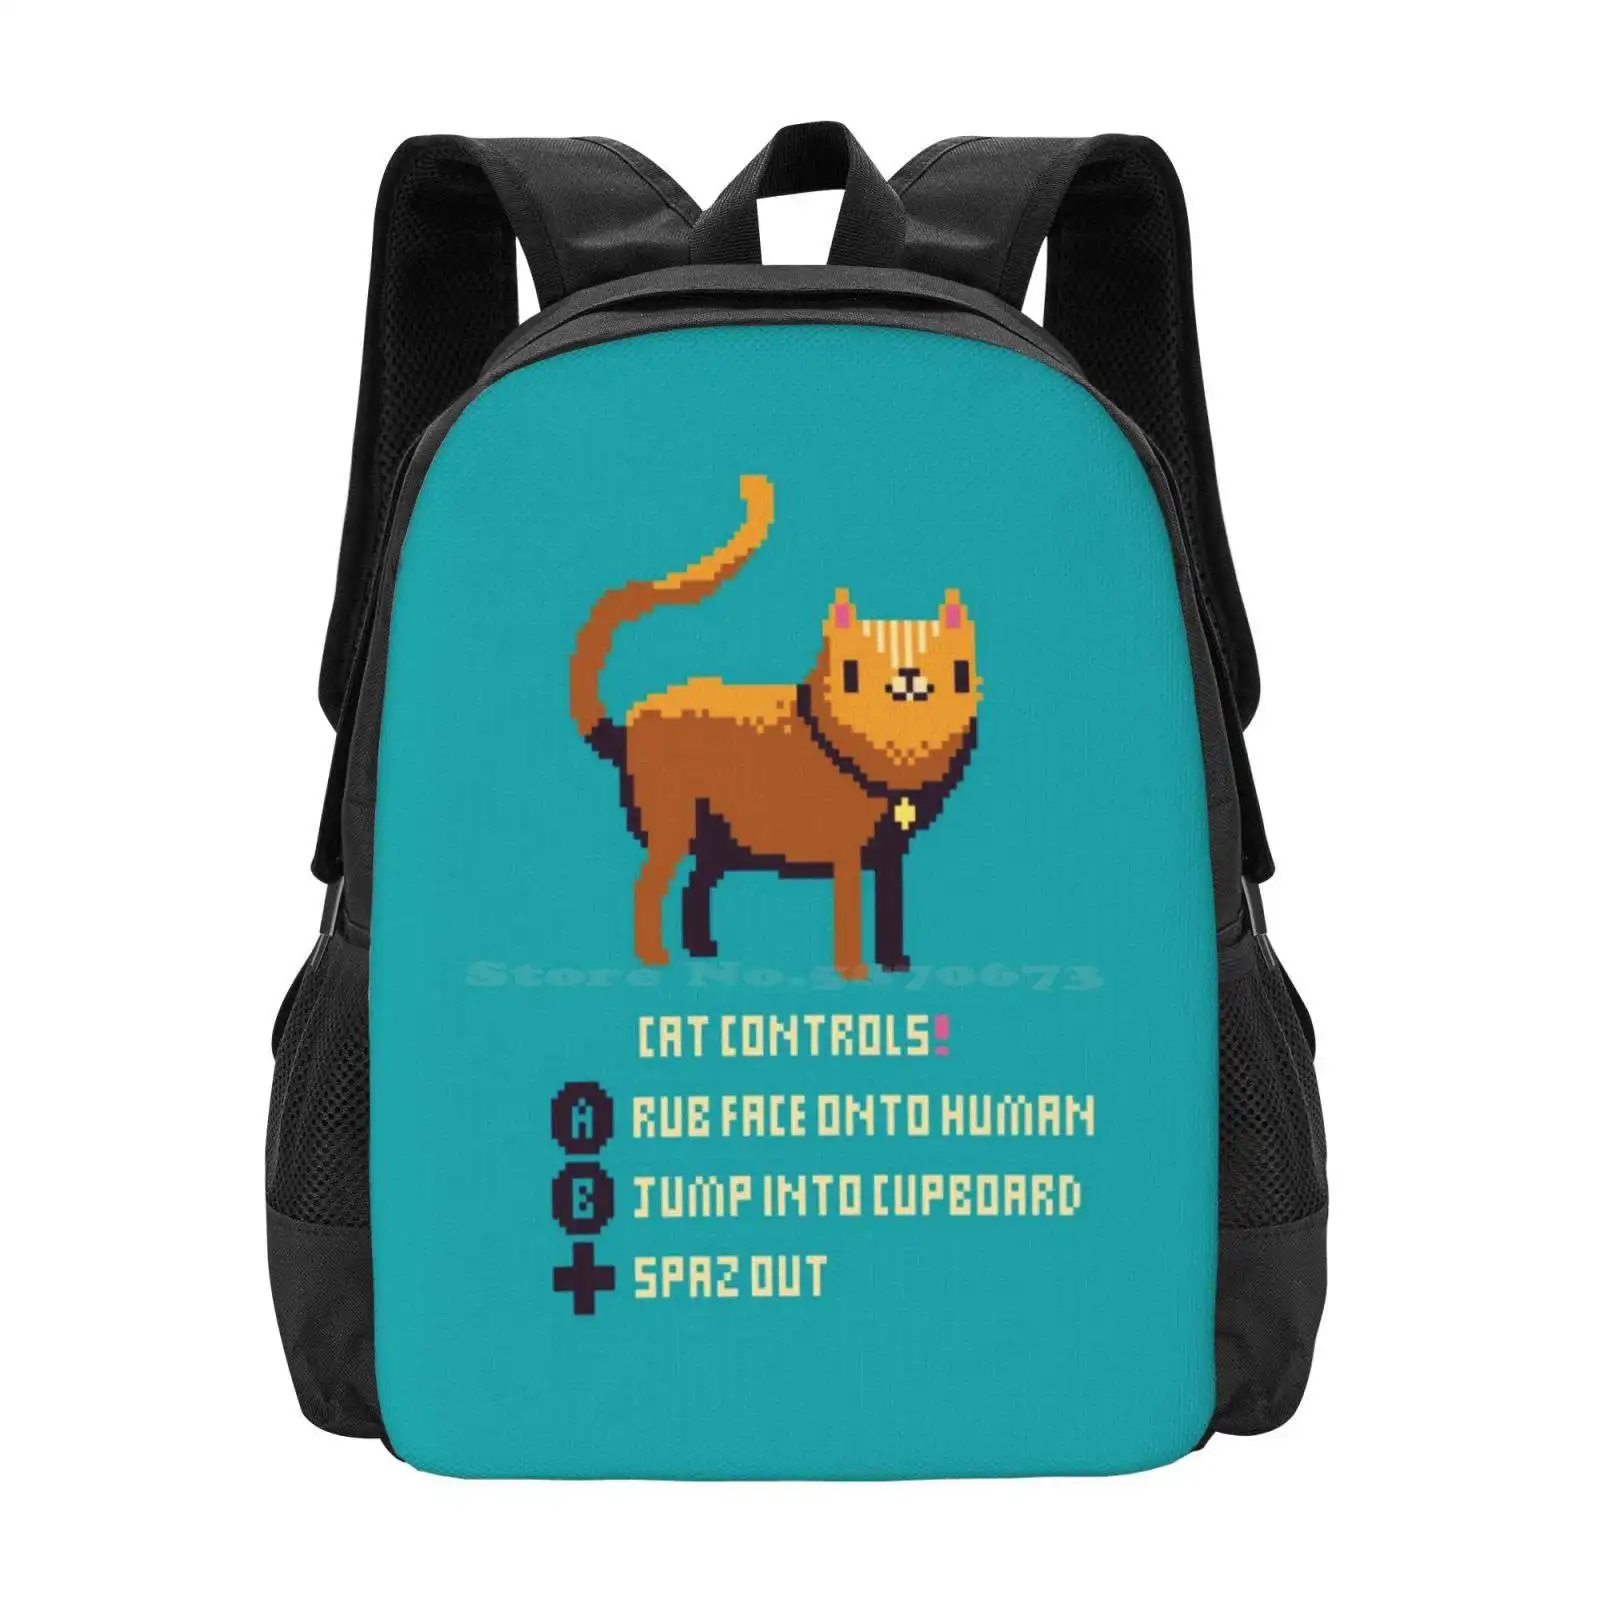 Cat Controls Hot Sale Backpack Fashion Bags Cute Cats Cat Spaz Out Cat Closet Cat Memes Cat 8 Bit Cat Pixel Art